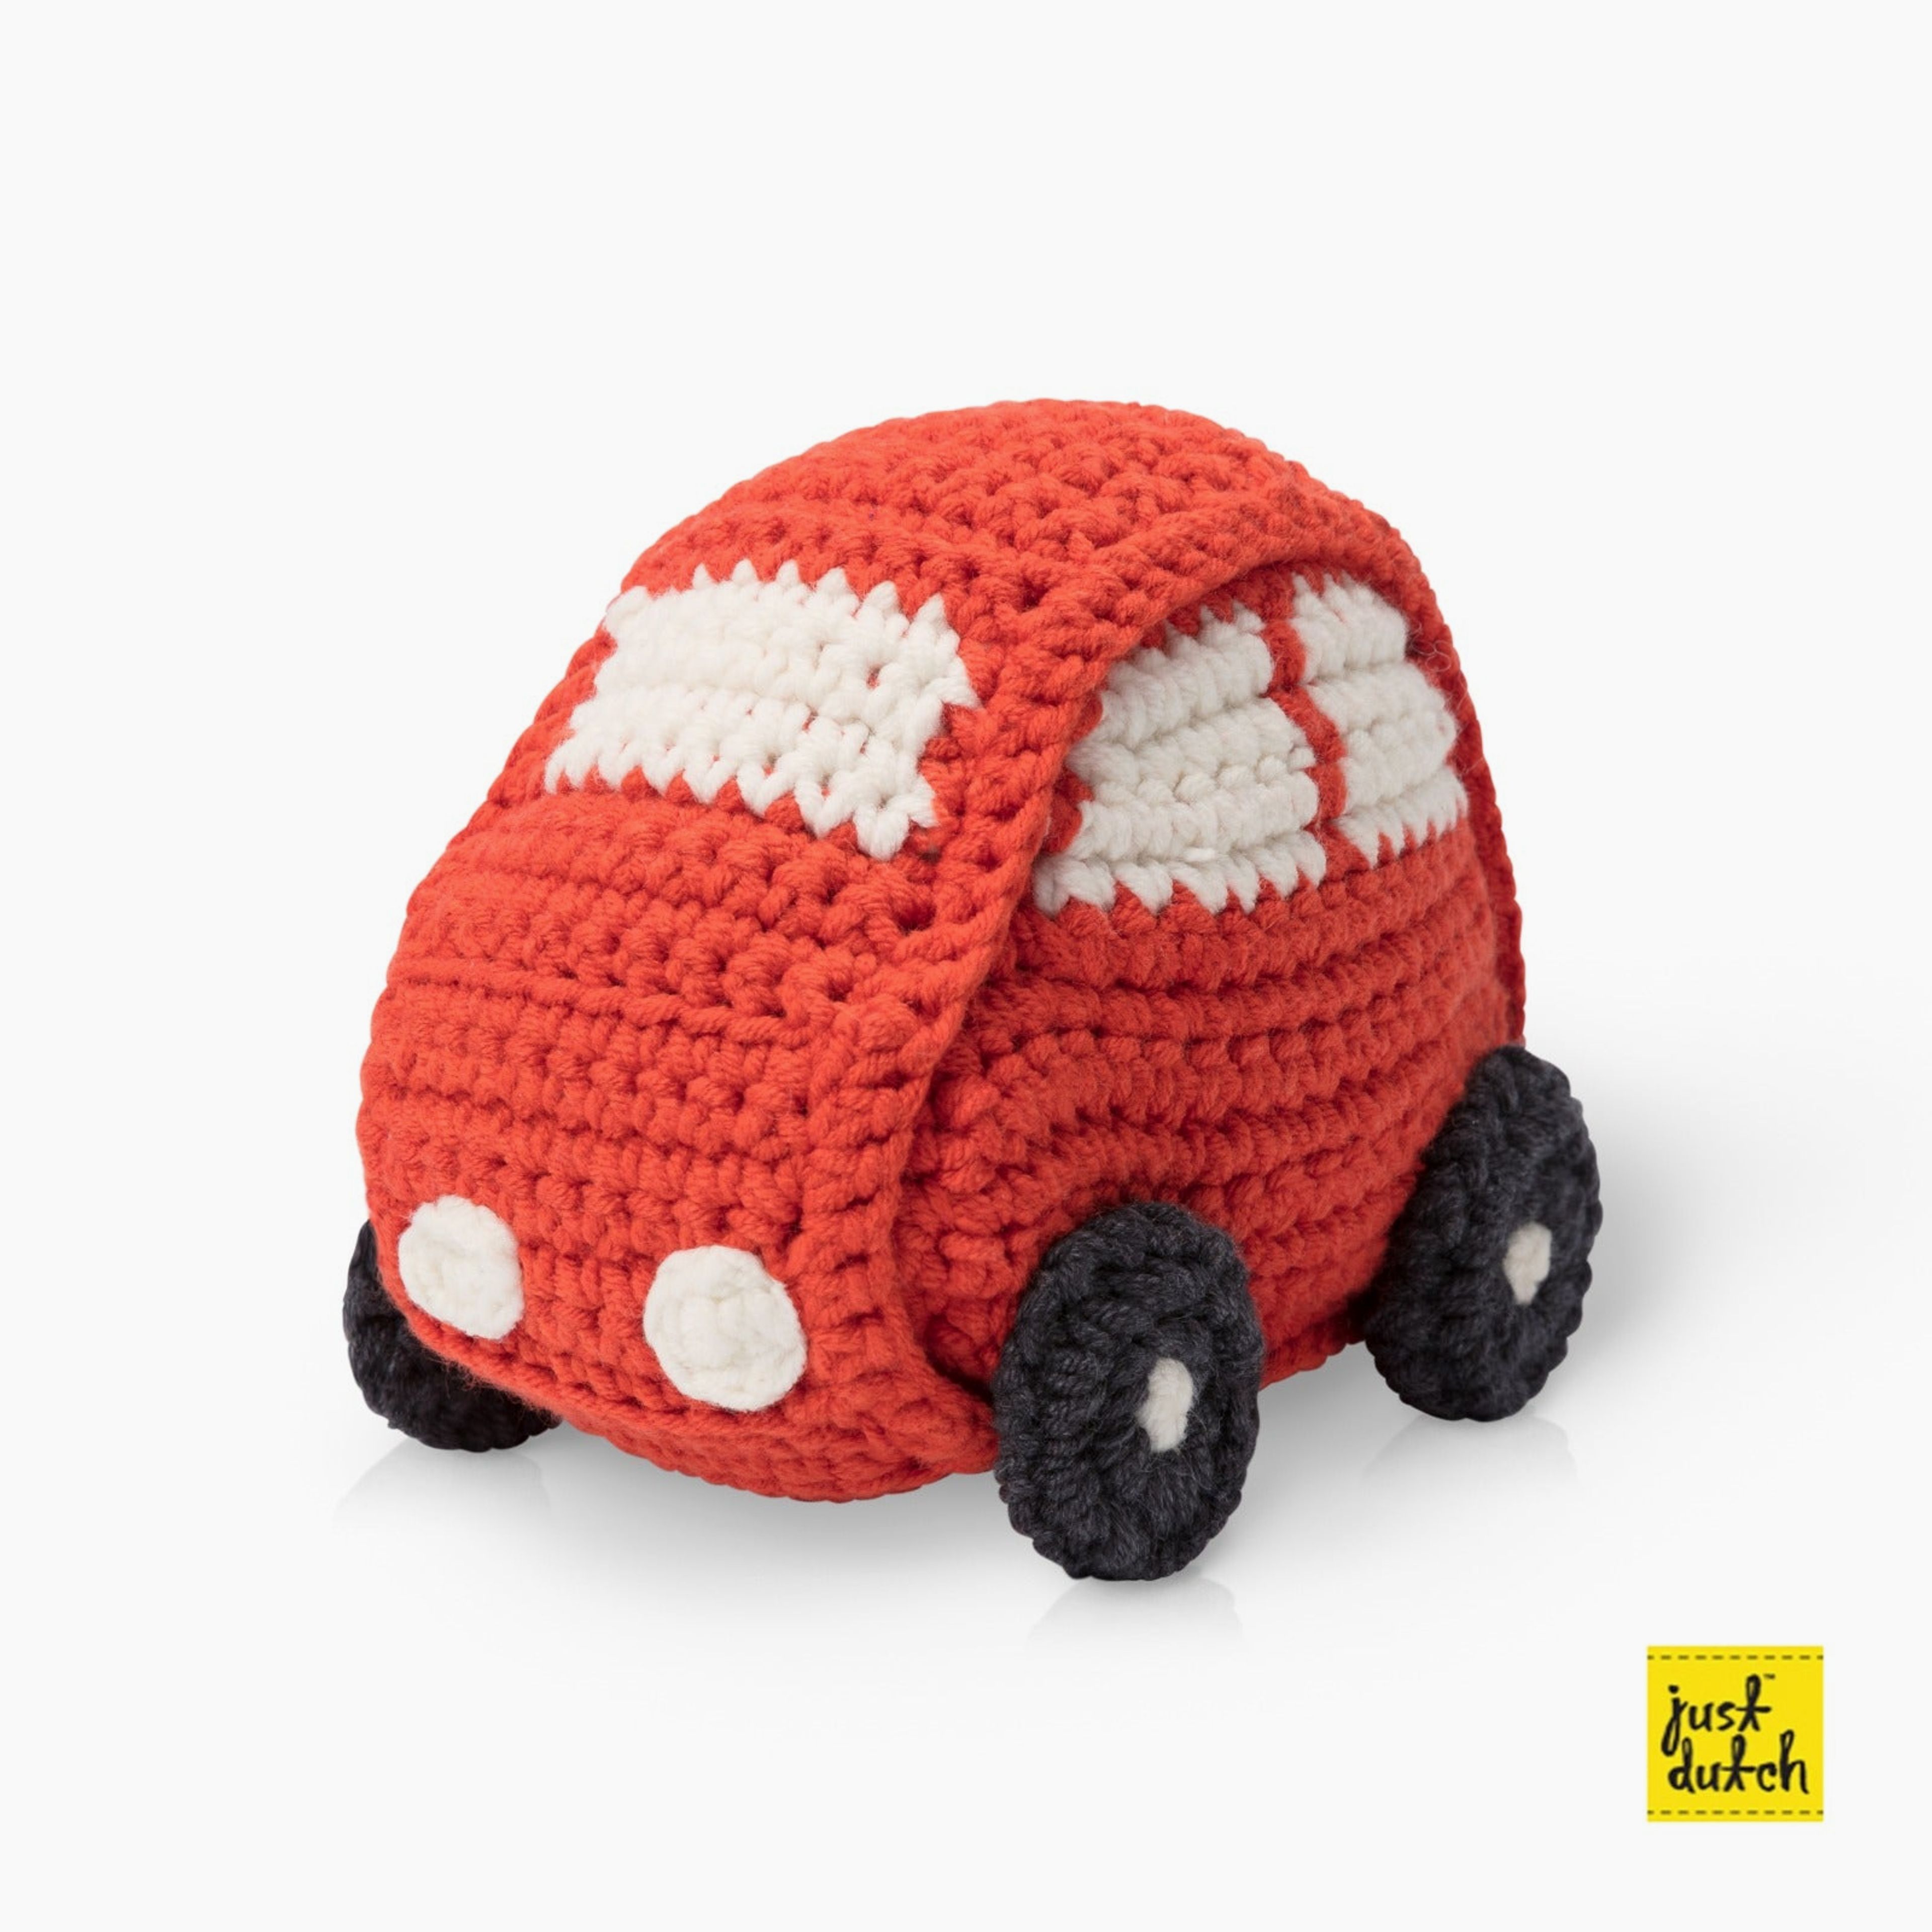 Just Dutch Handmade Toy Cars